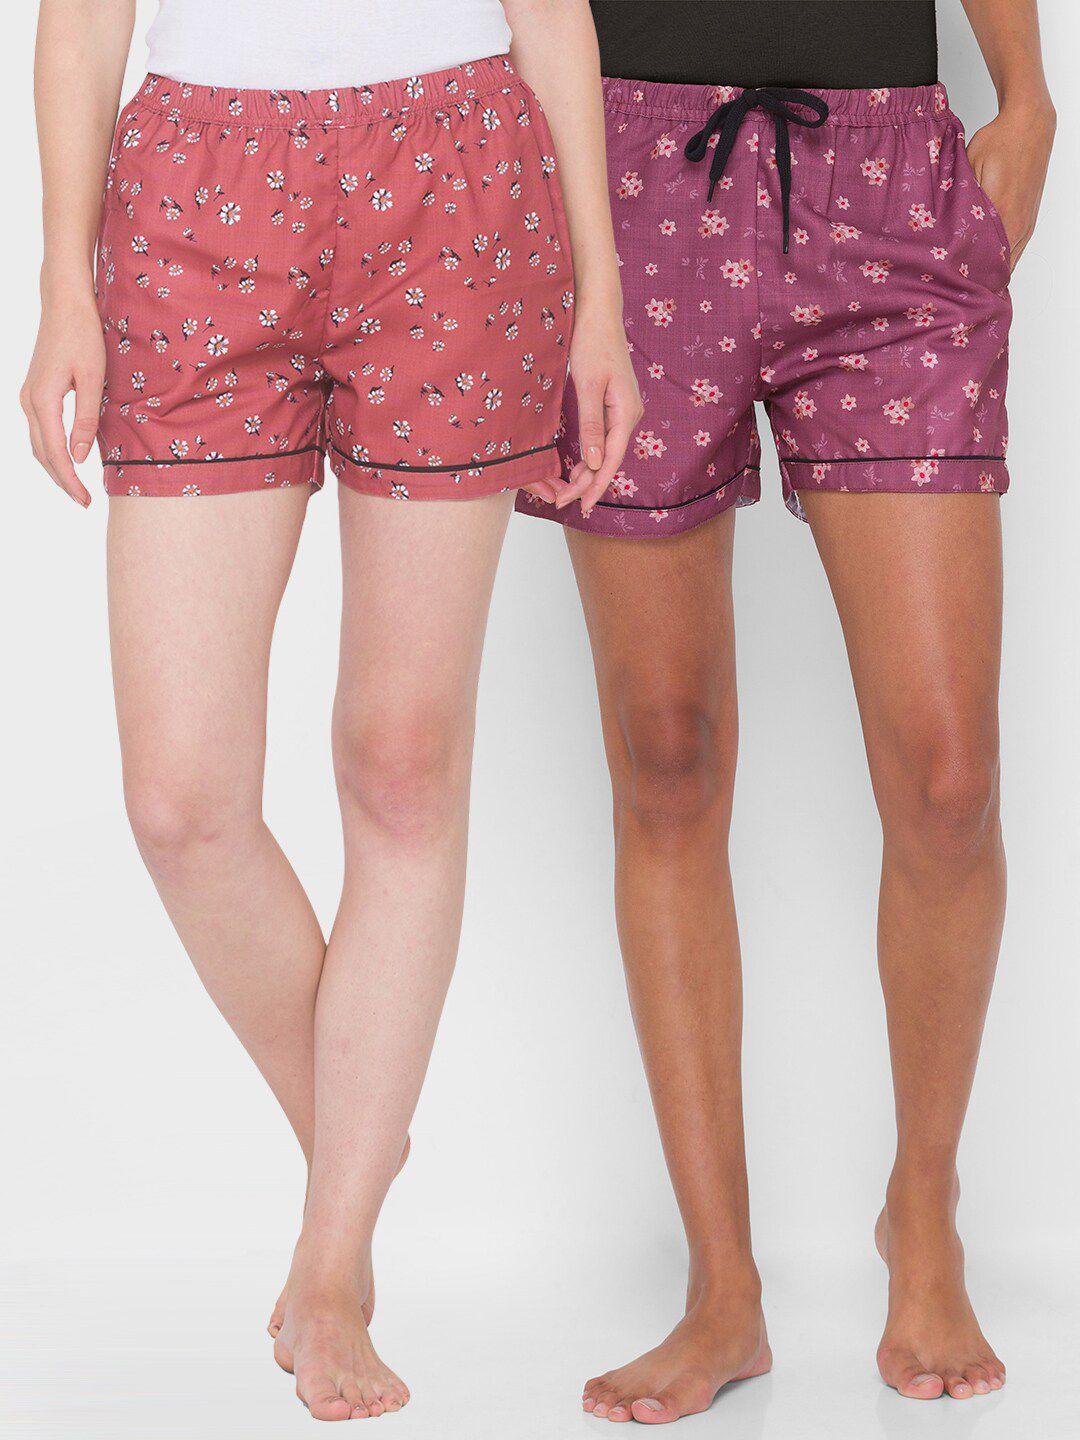 fashionrack women brown & purple set of 2 printed lounge shorts